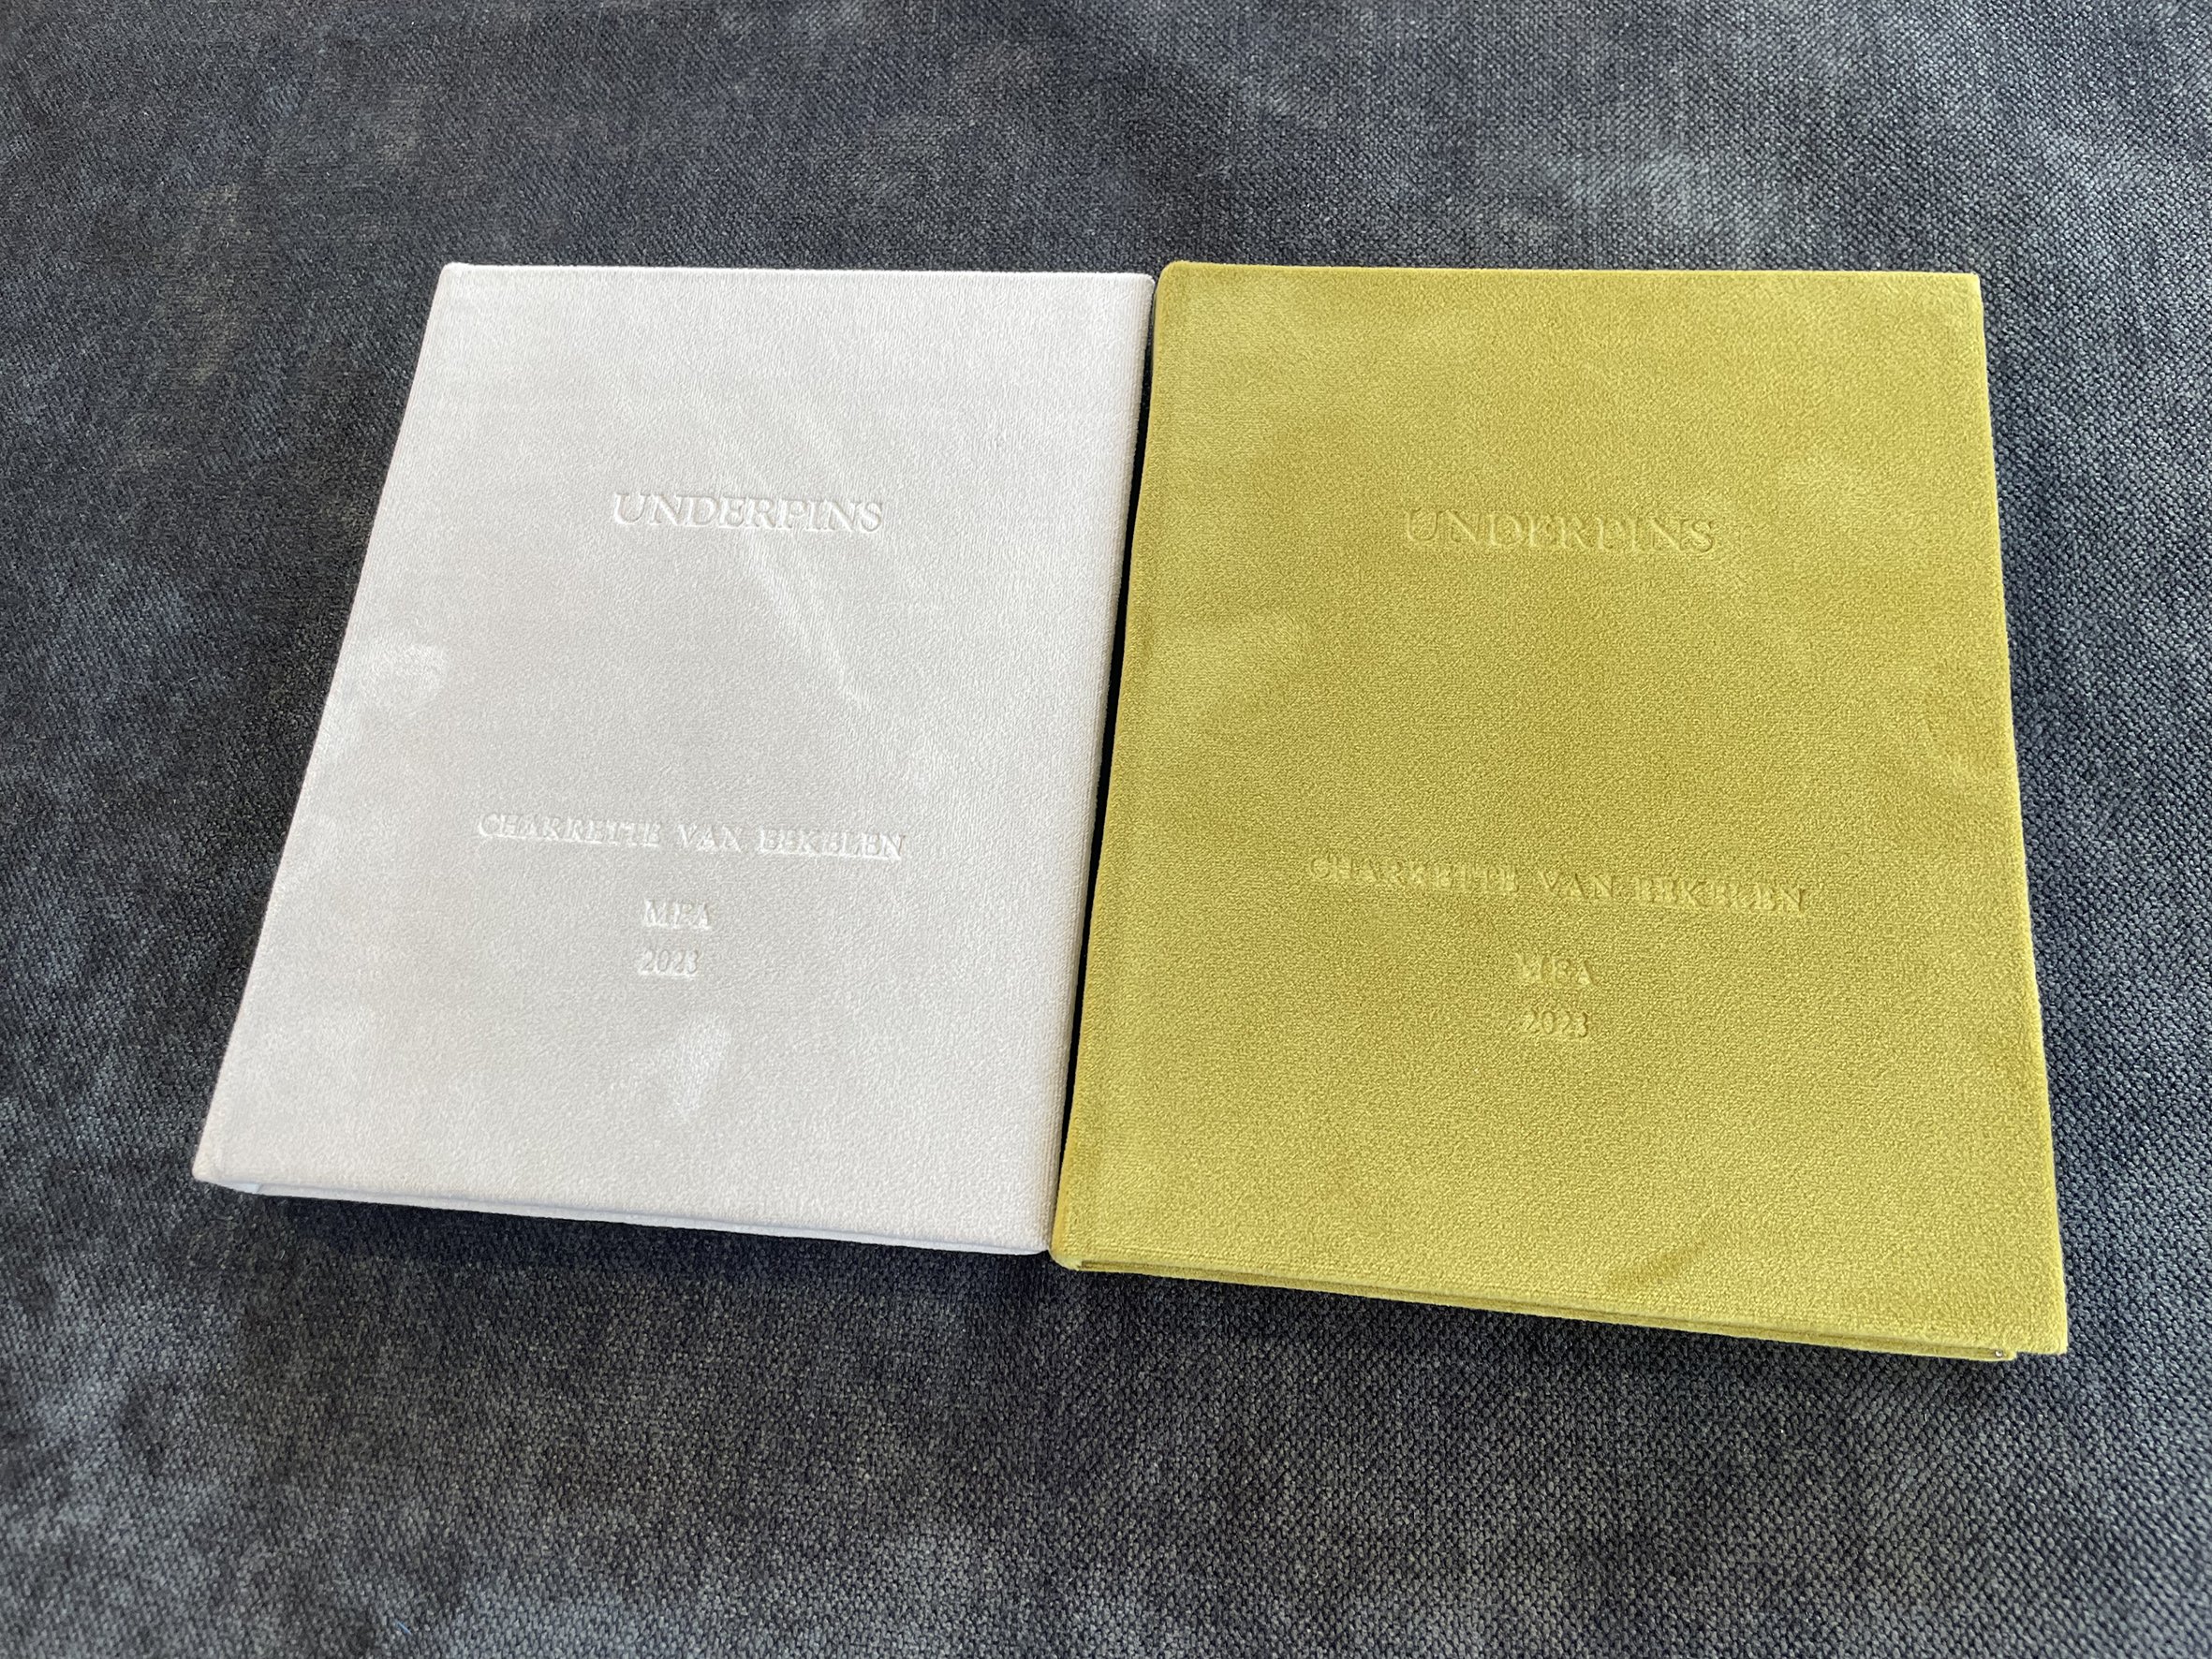 KaraBurrowes-charrettevaneekelen-design-book-covers-mfa-LR.jpg